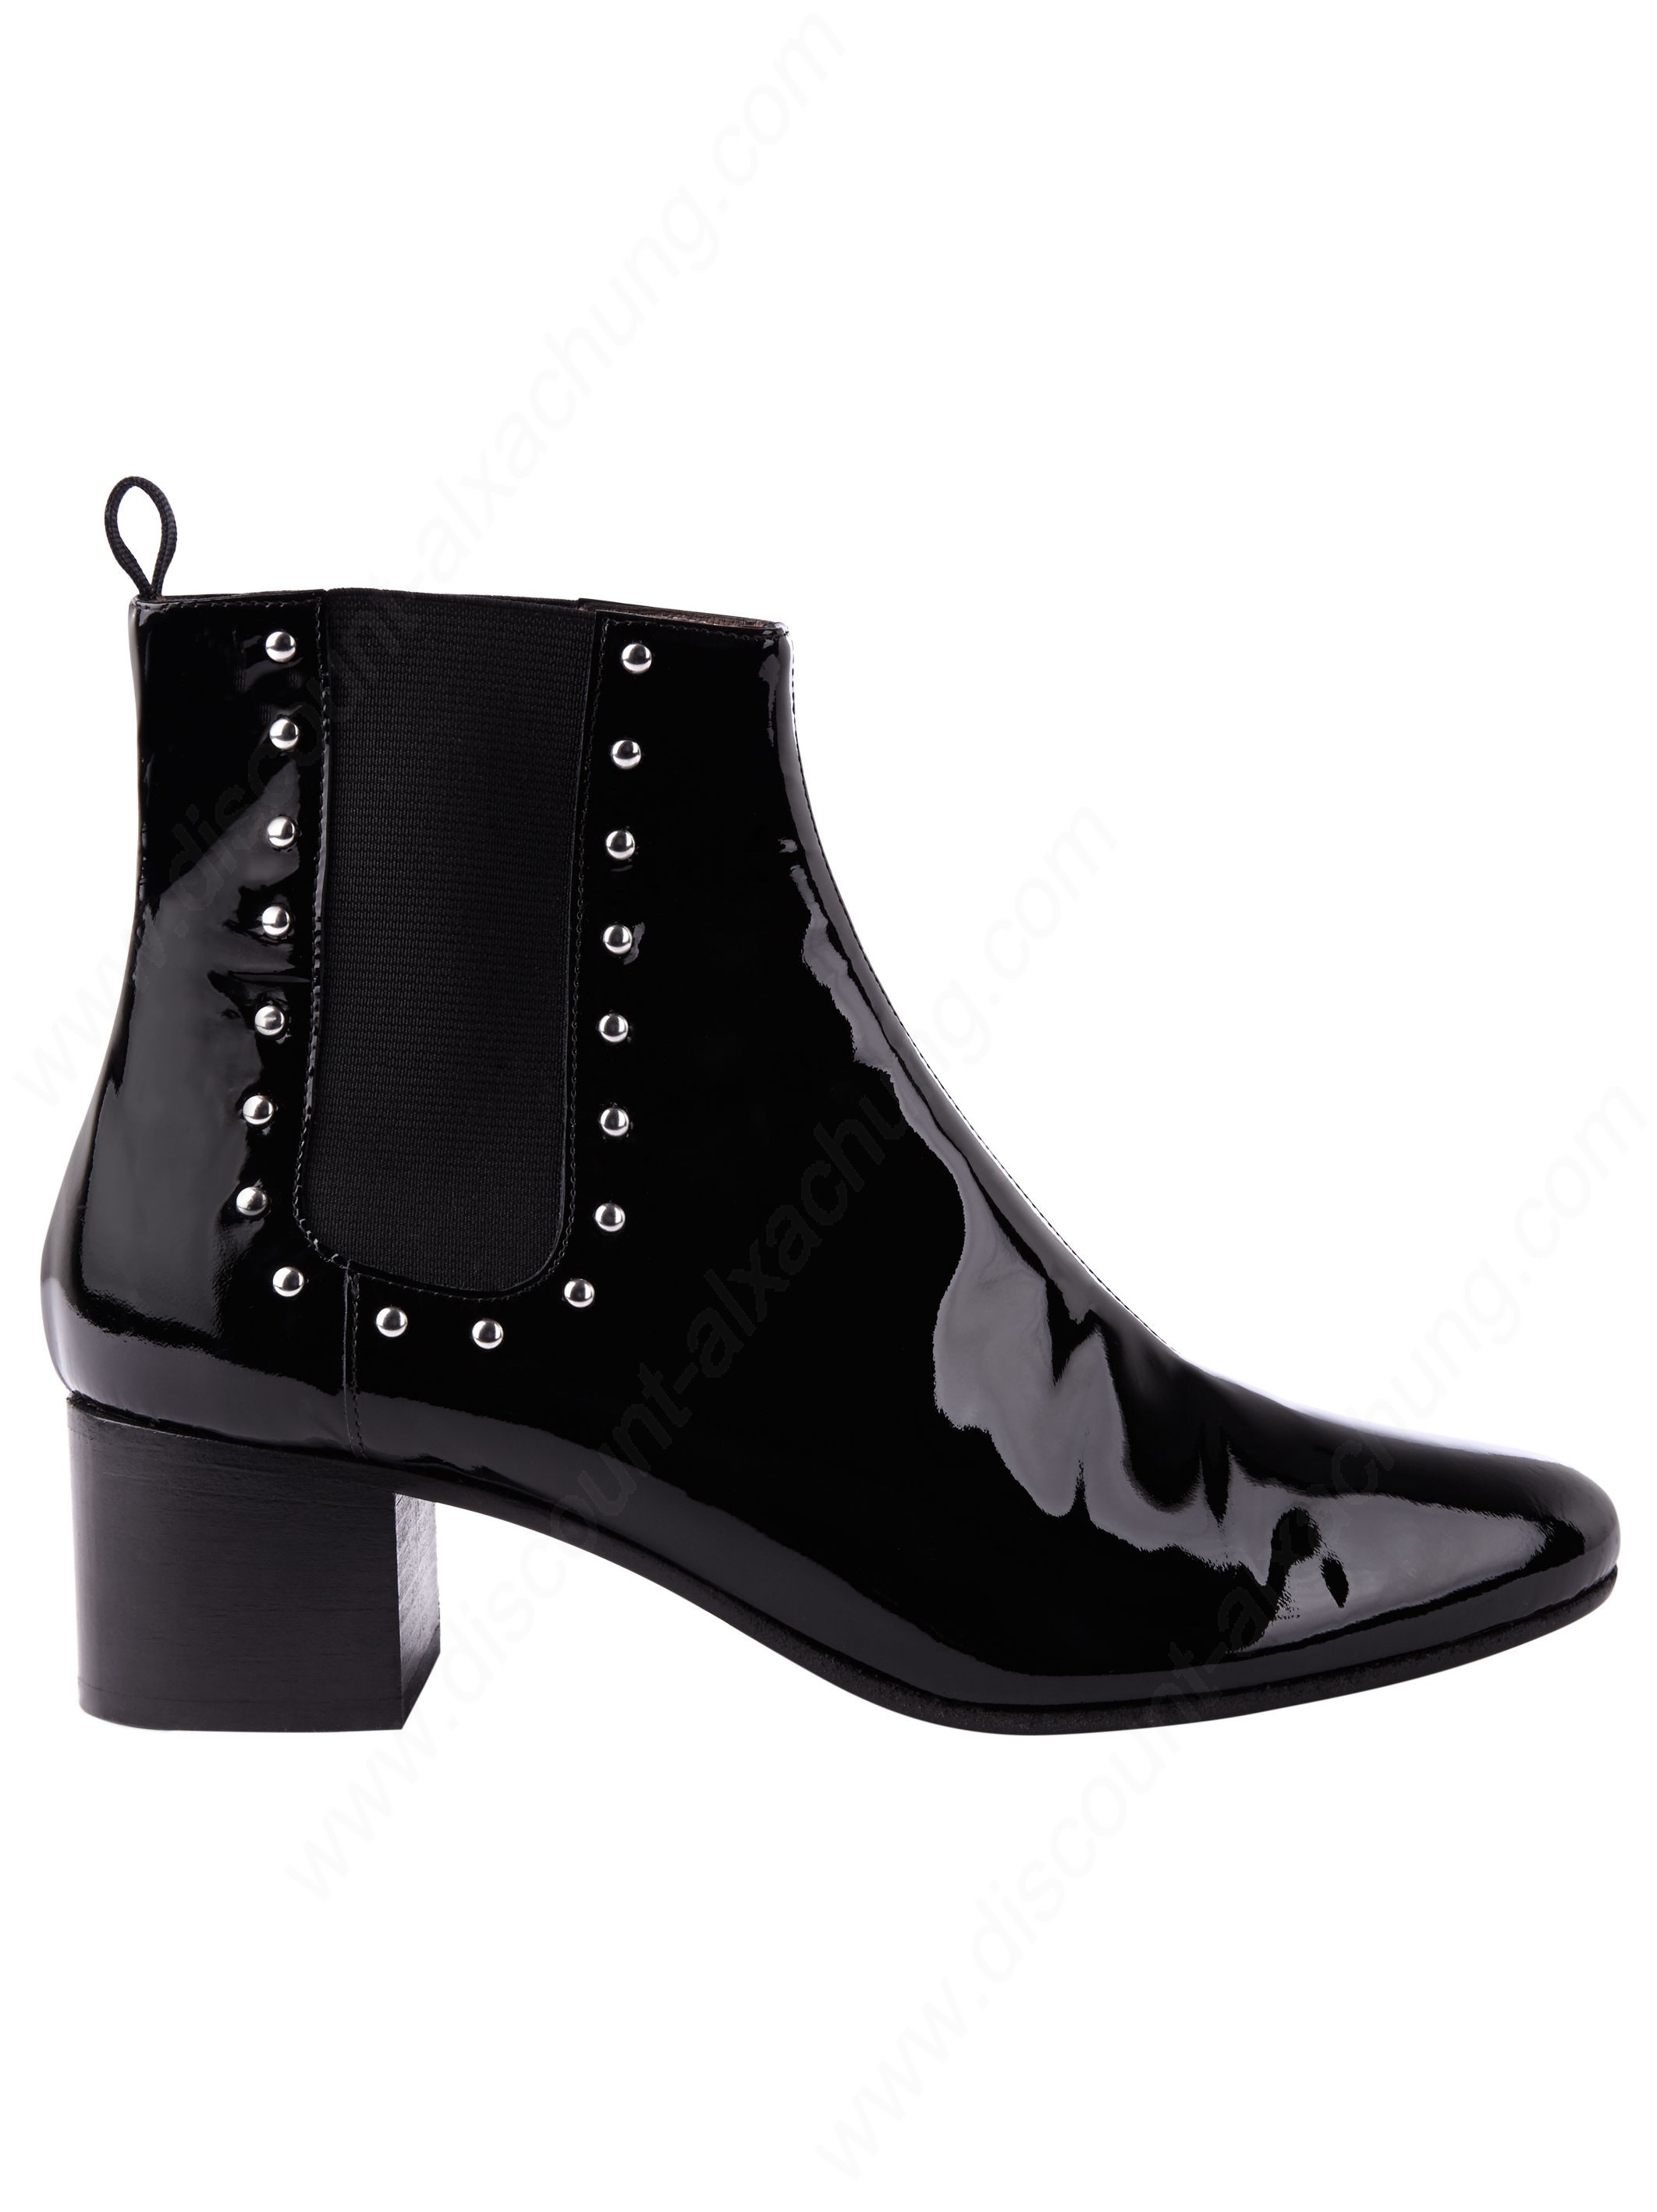 Alexachung Black Studded Chelsea Boot - Alexachung Black Studded Chelsea Boot